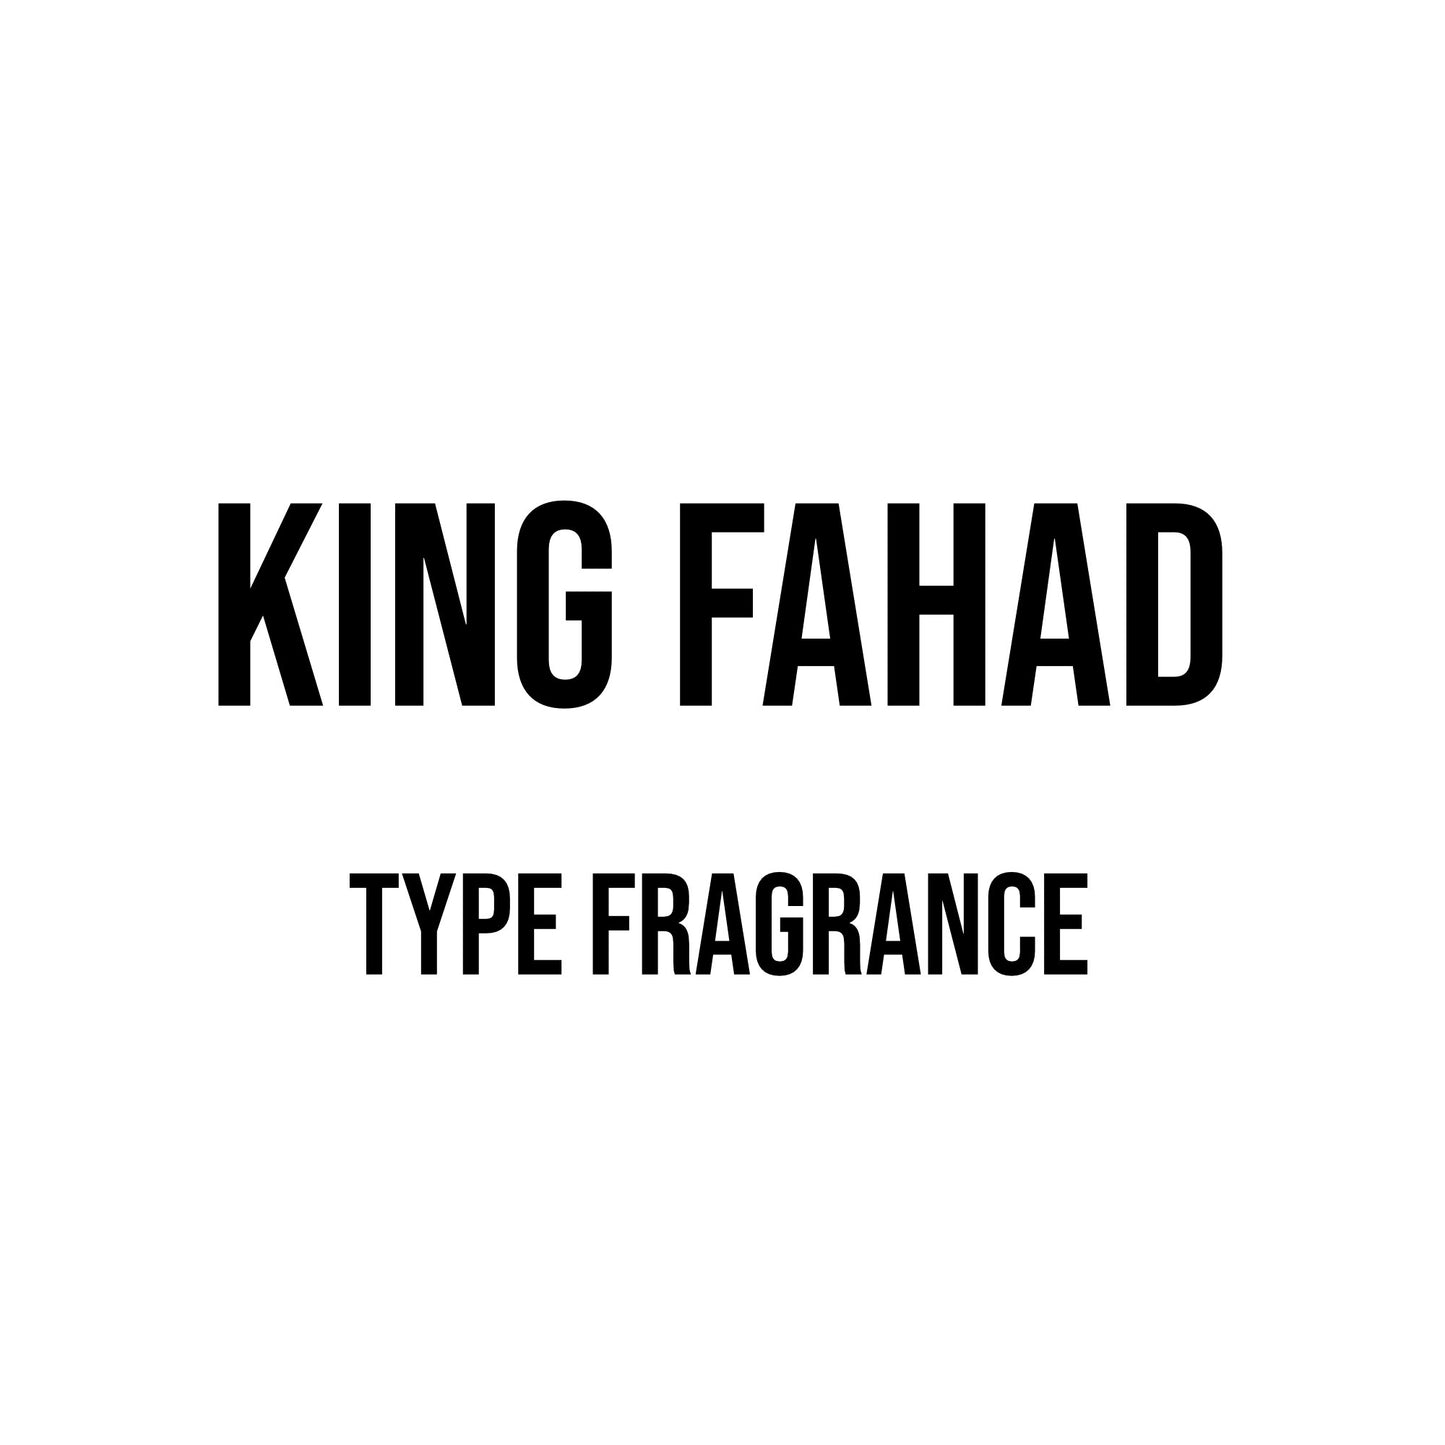 King Fahad Type Fragrance